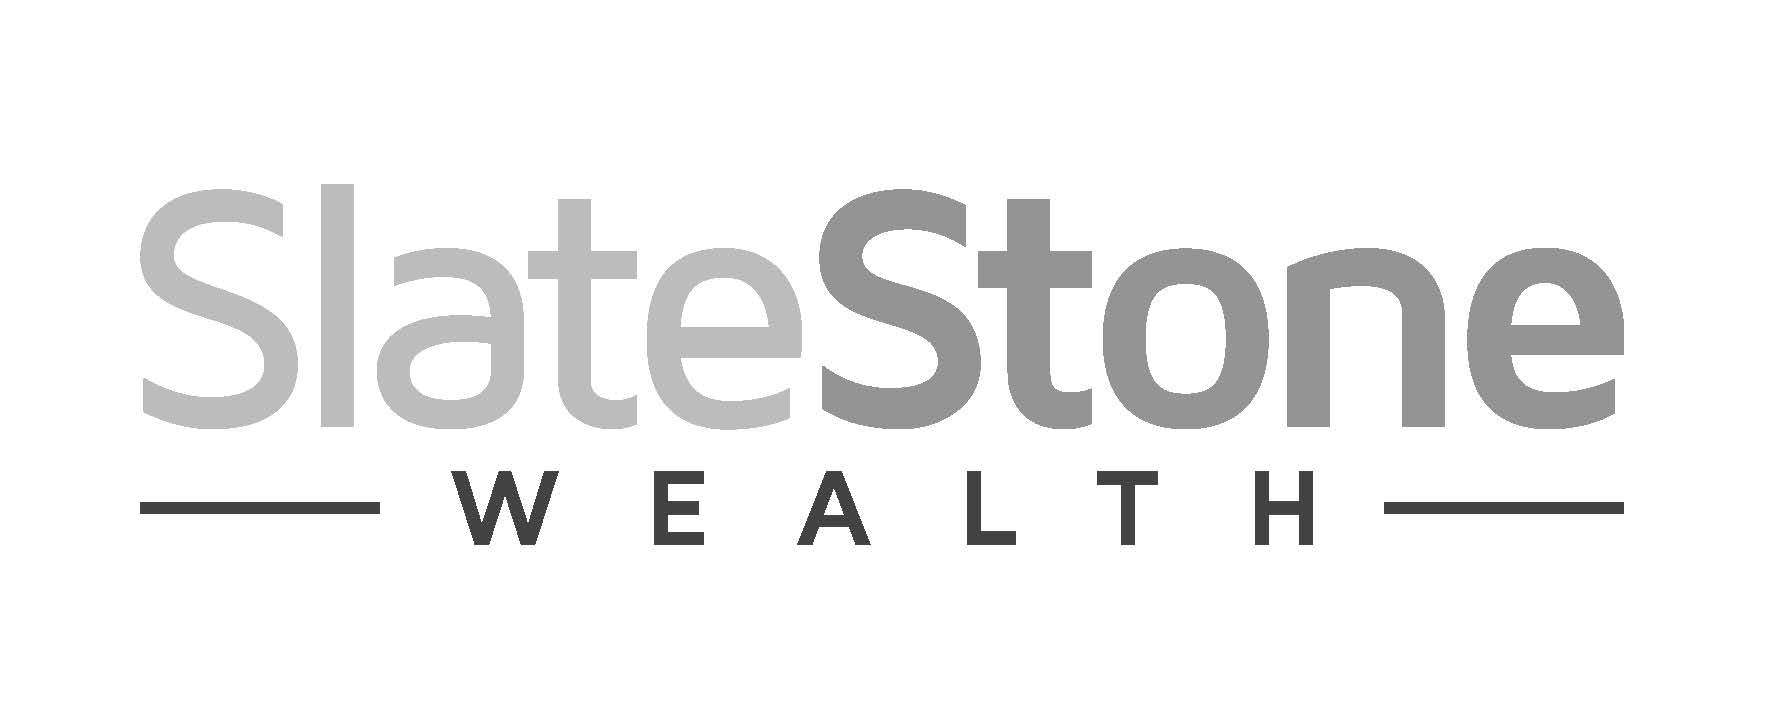 Slatestone Wealth